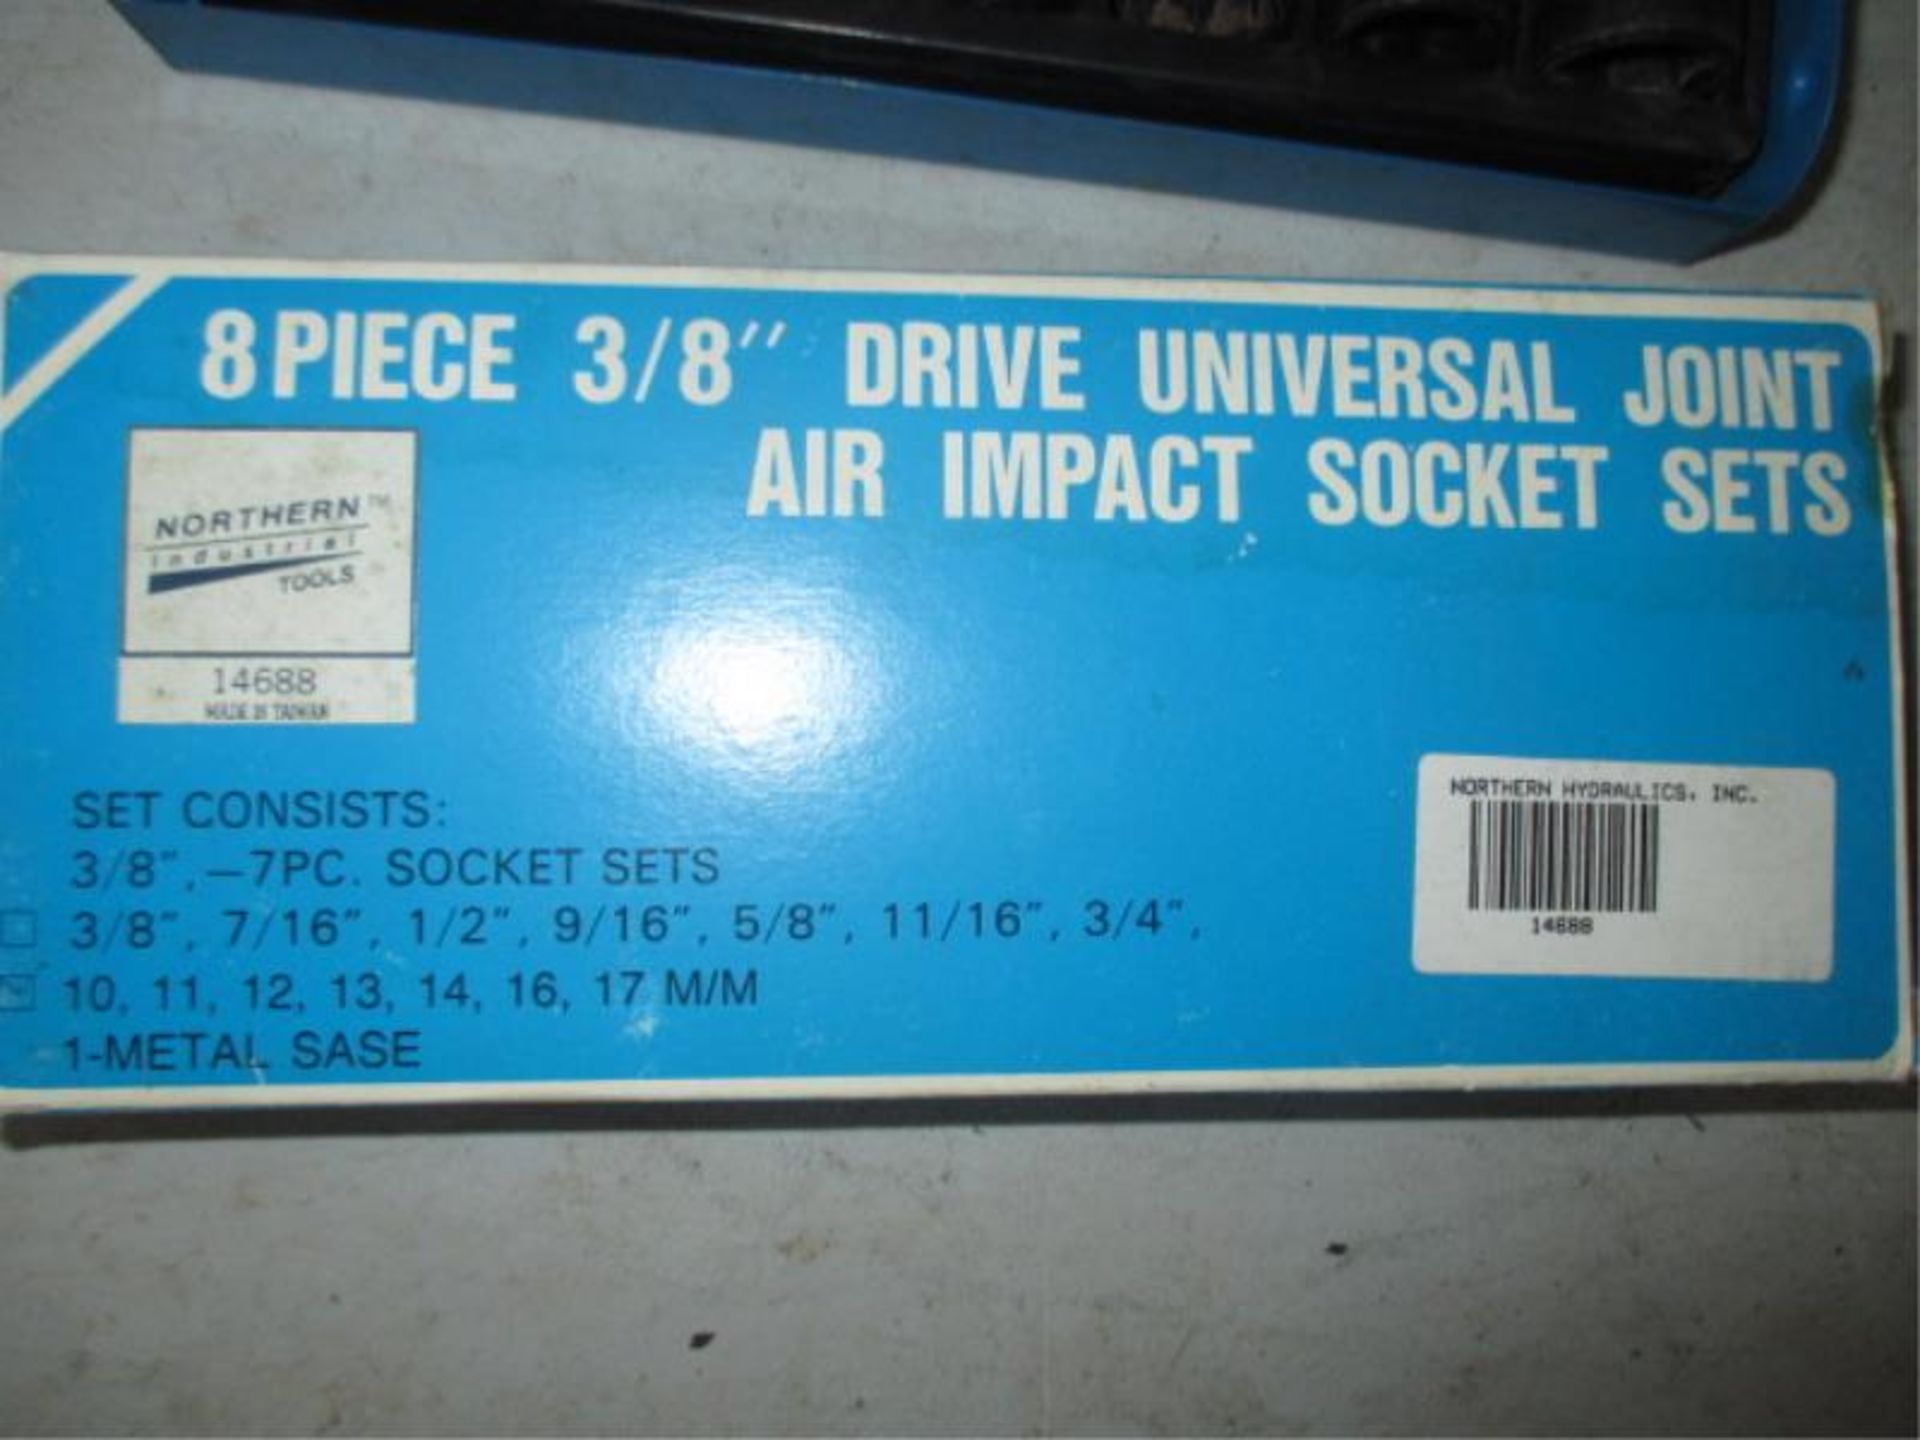 (2) 8pc 3/8" Dr, Impact Universal Socket Set in Blue Case, 1 - New in Box Blue Case, 1 - New in Box - Image 3 of 6